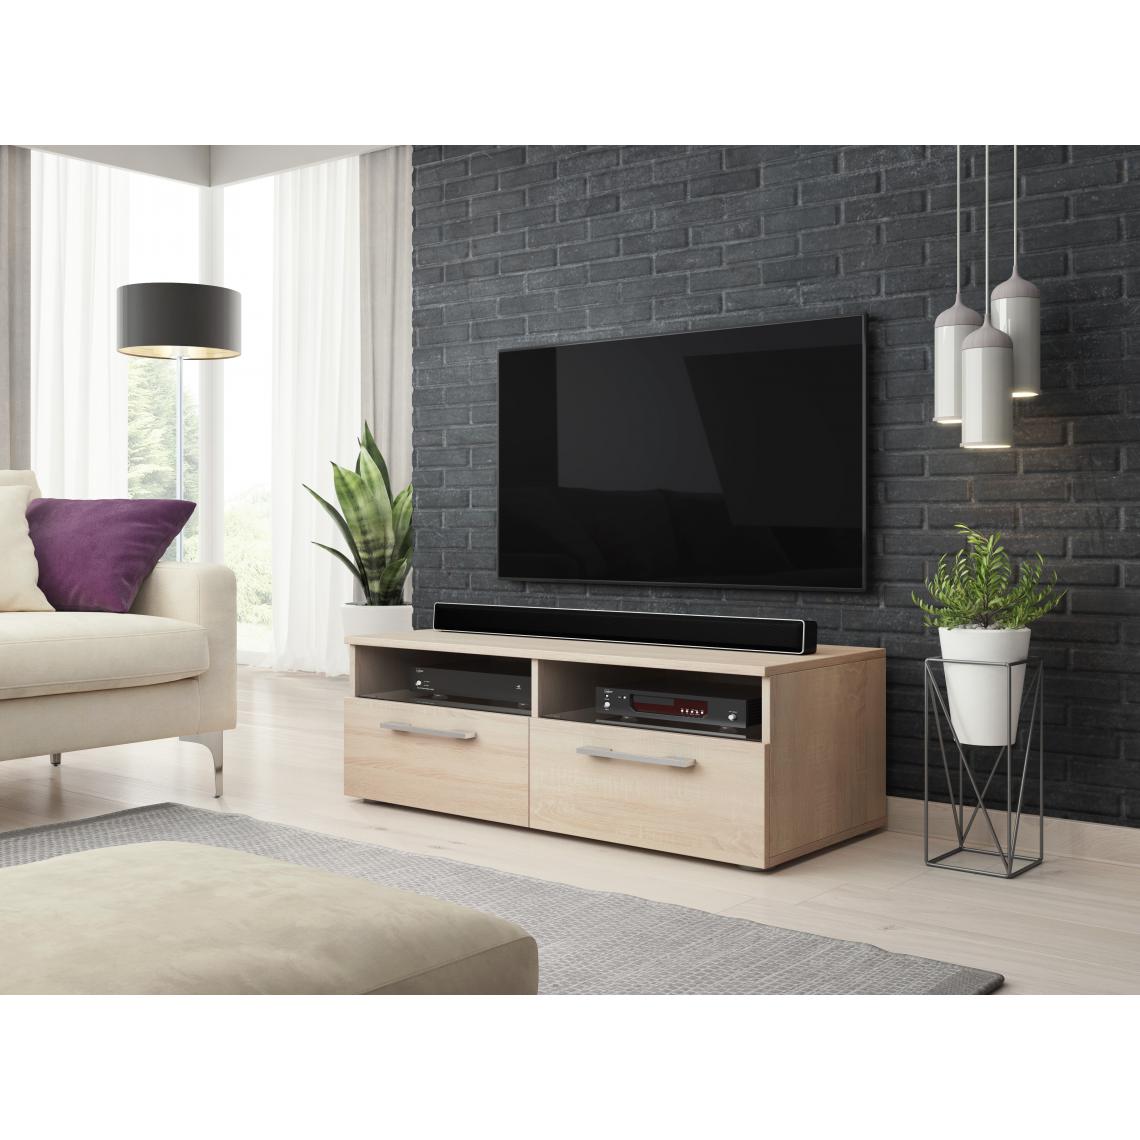 3xeliving - Meuble TV classique Zumbi Sonoma 100 cm - Meubles TV, Hi-Fi